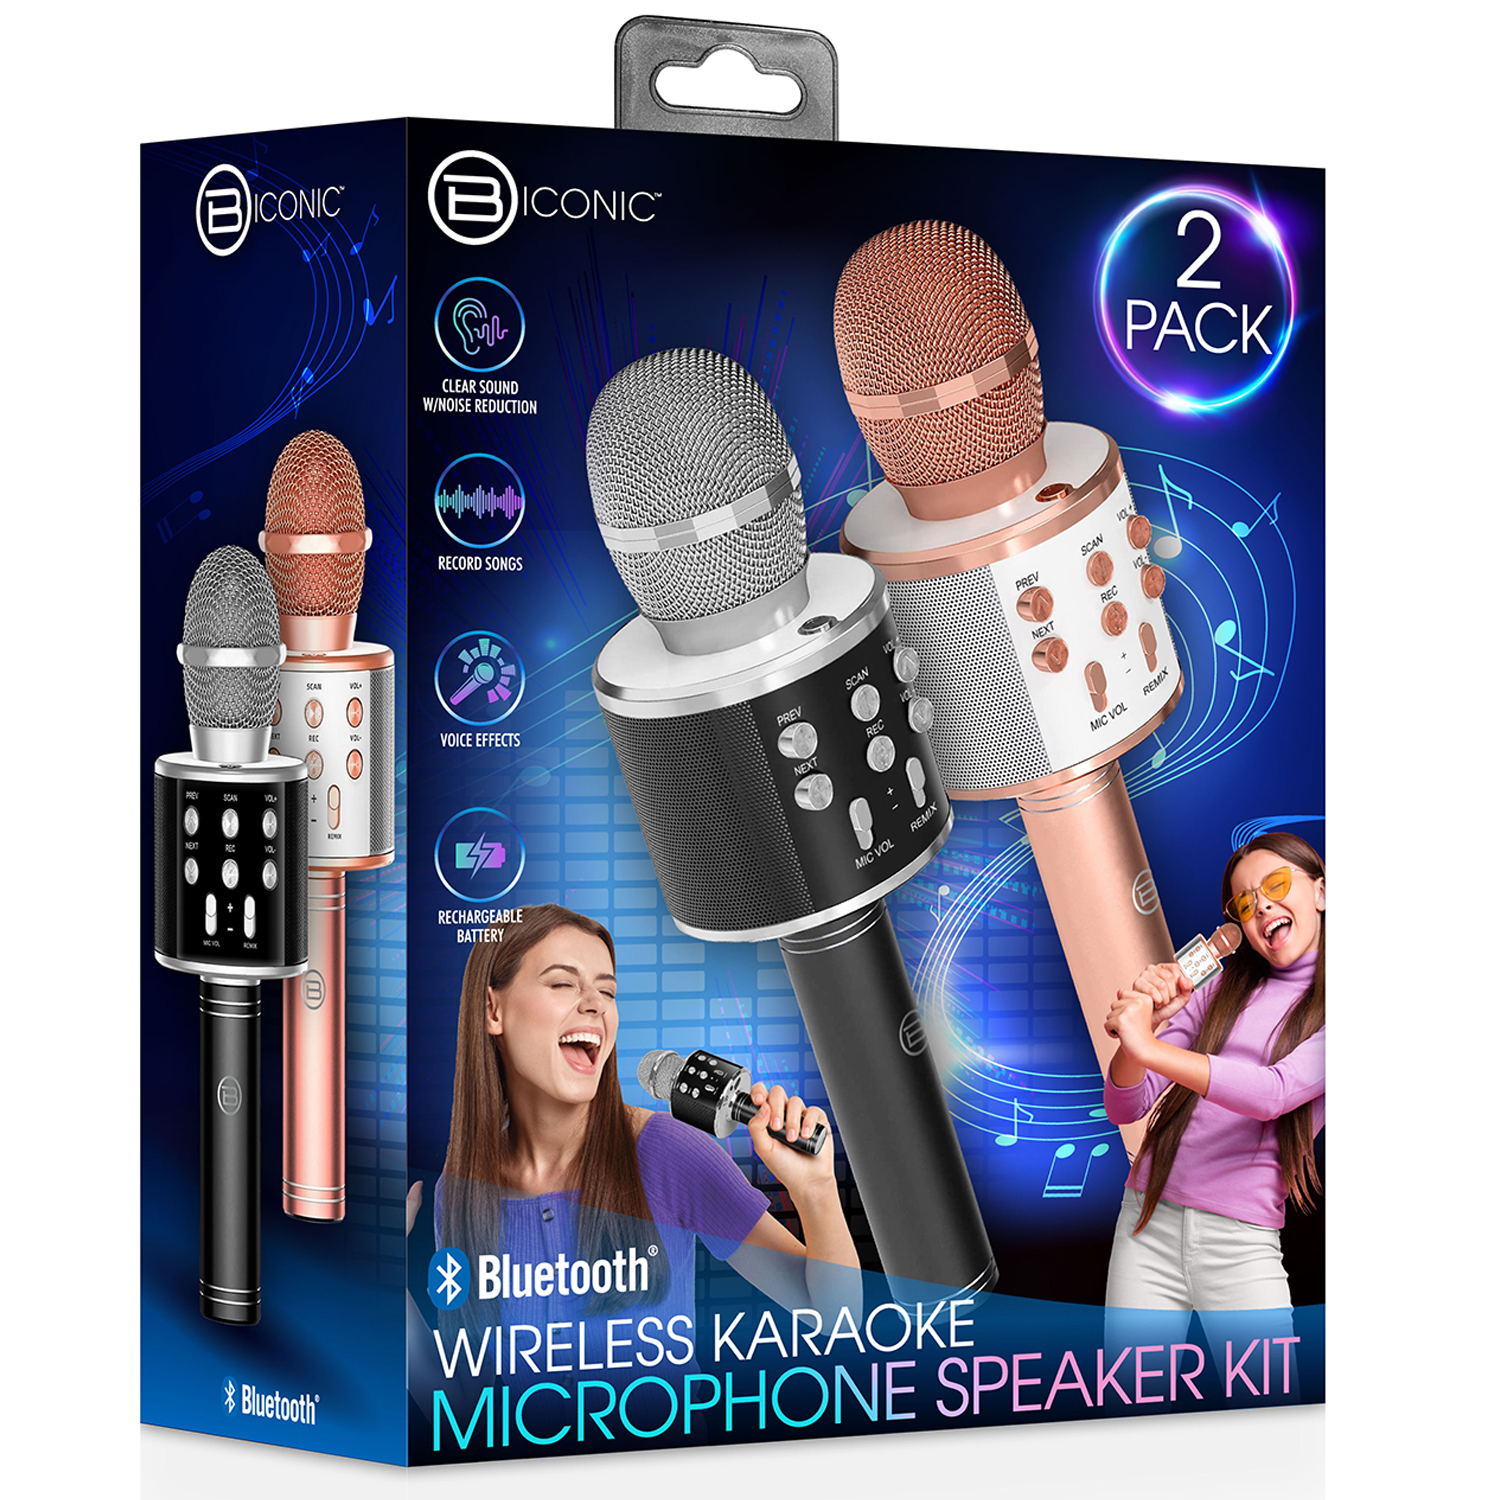 Micro karaoke et haut parleur bluetooth – Cheapshop